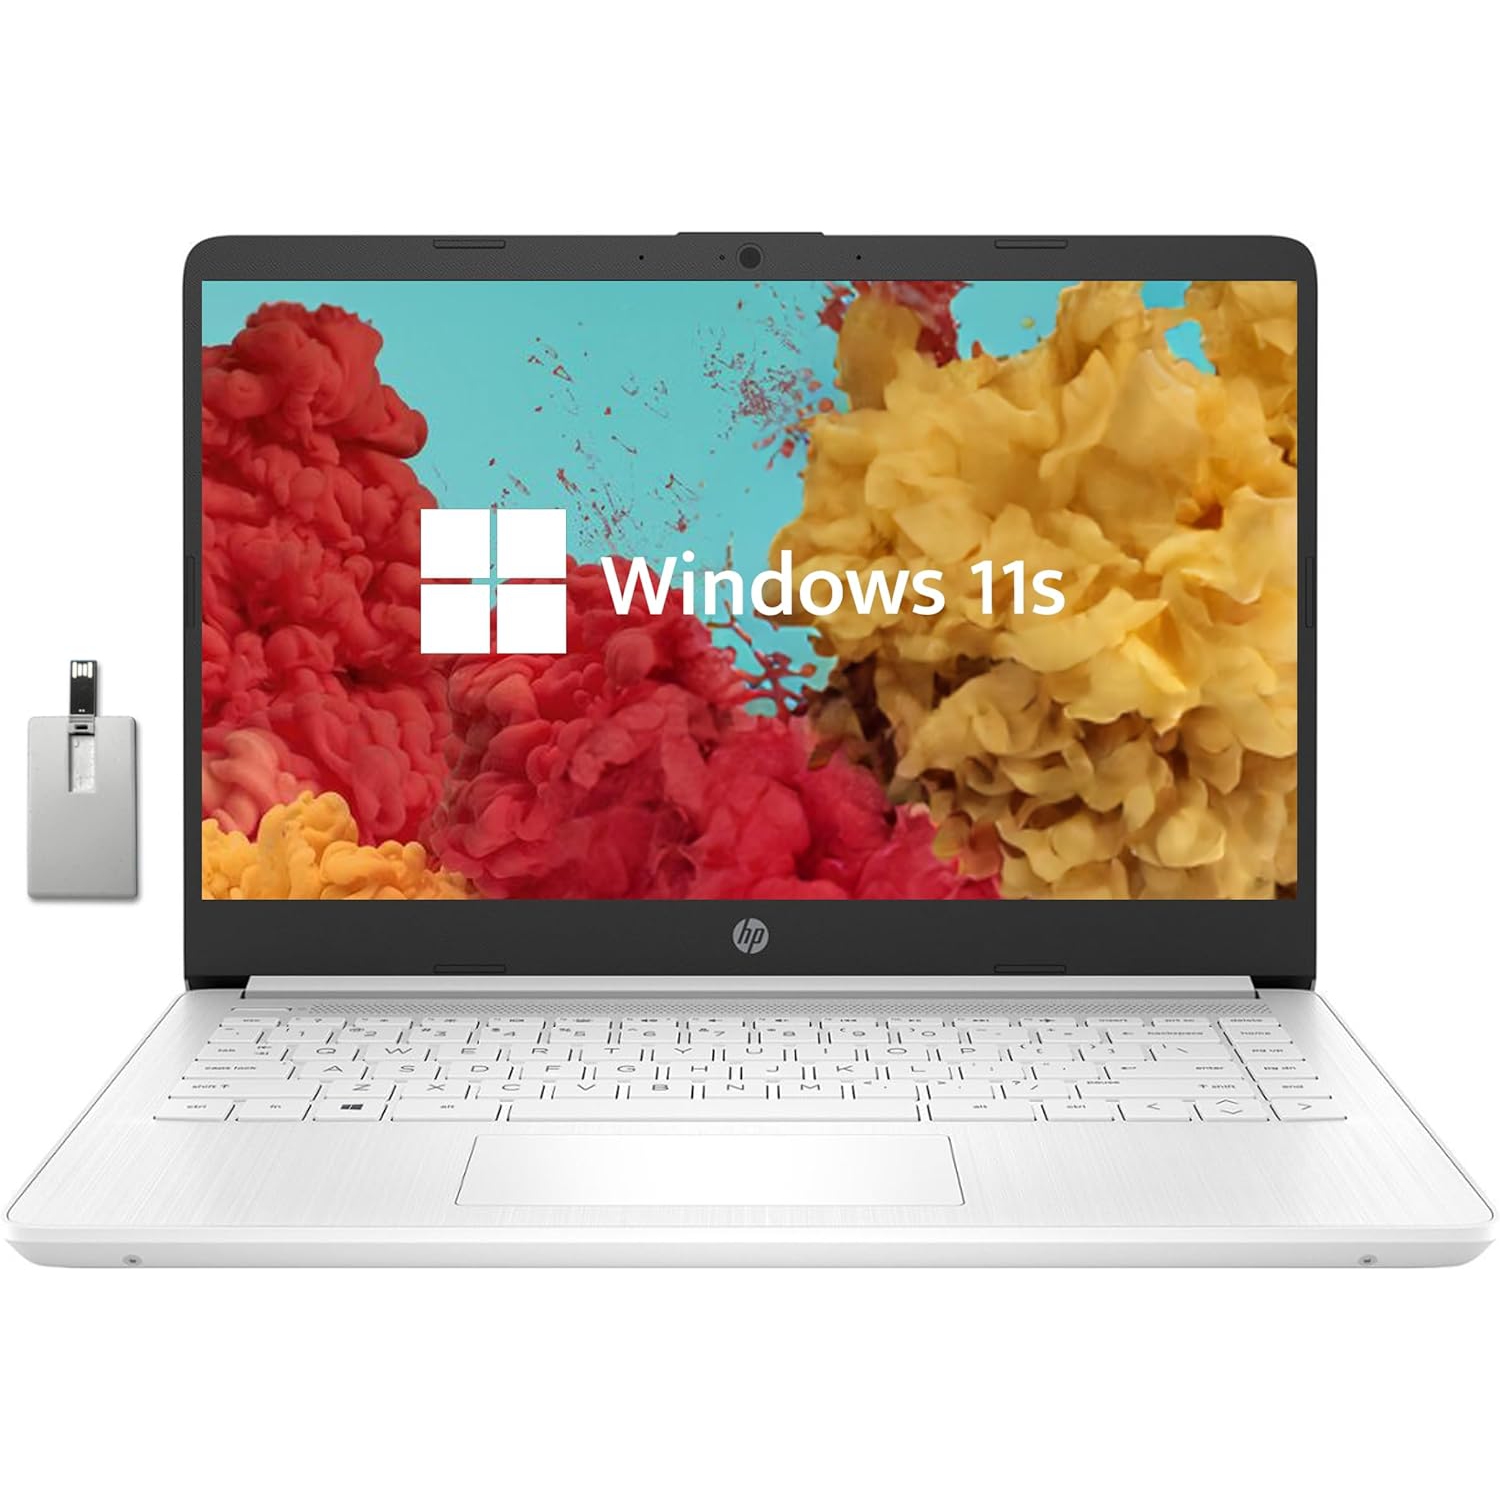 HP Premium Stream 14" HD BrightView Laptop, Intel Celeron N4000, 64GB eMMC, 8GB RAM, Intel UHD Graphics, HD Webcam, 1 Year Office 365, HDMI, Win 11s, White, 32GB USB Card